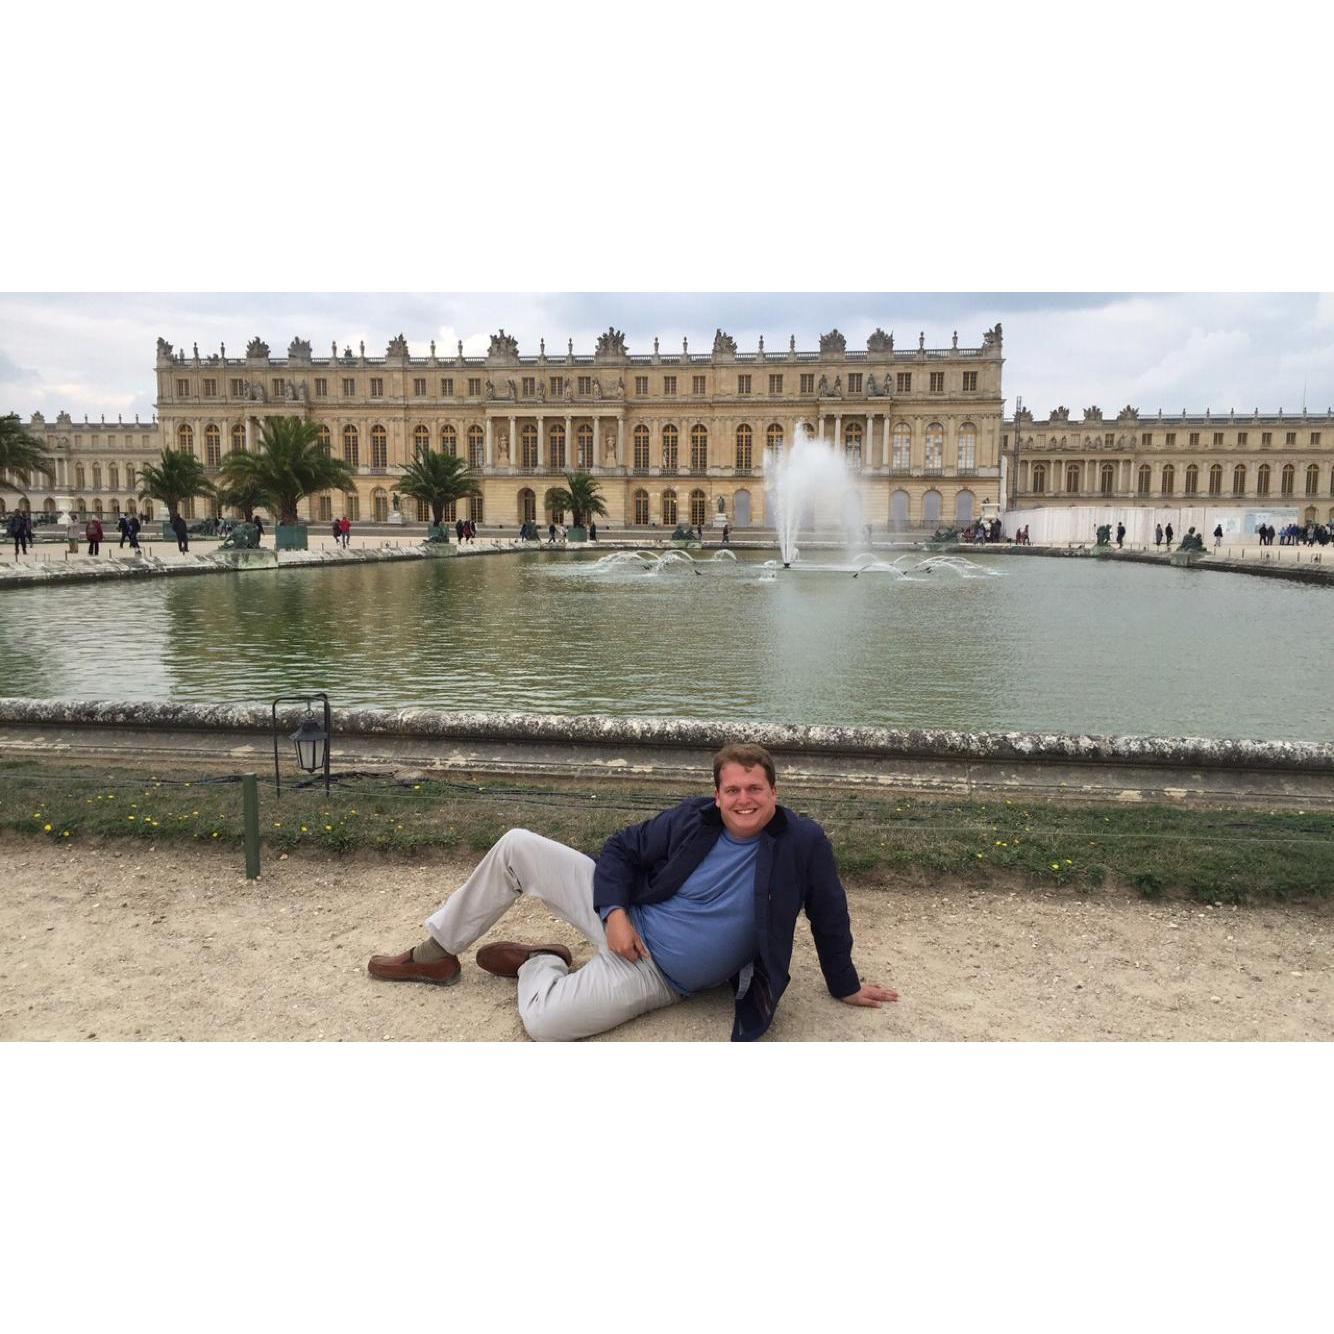 Versailles France - October 2016